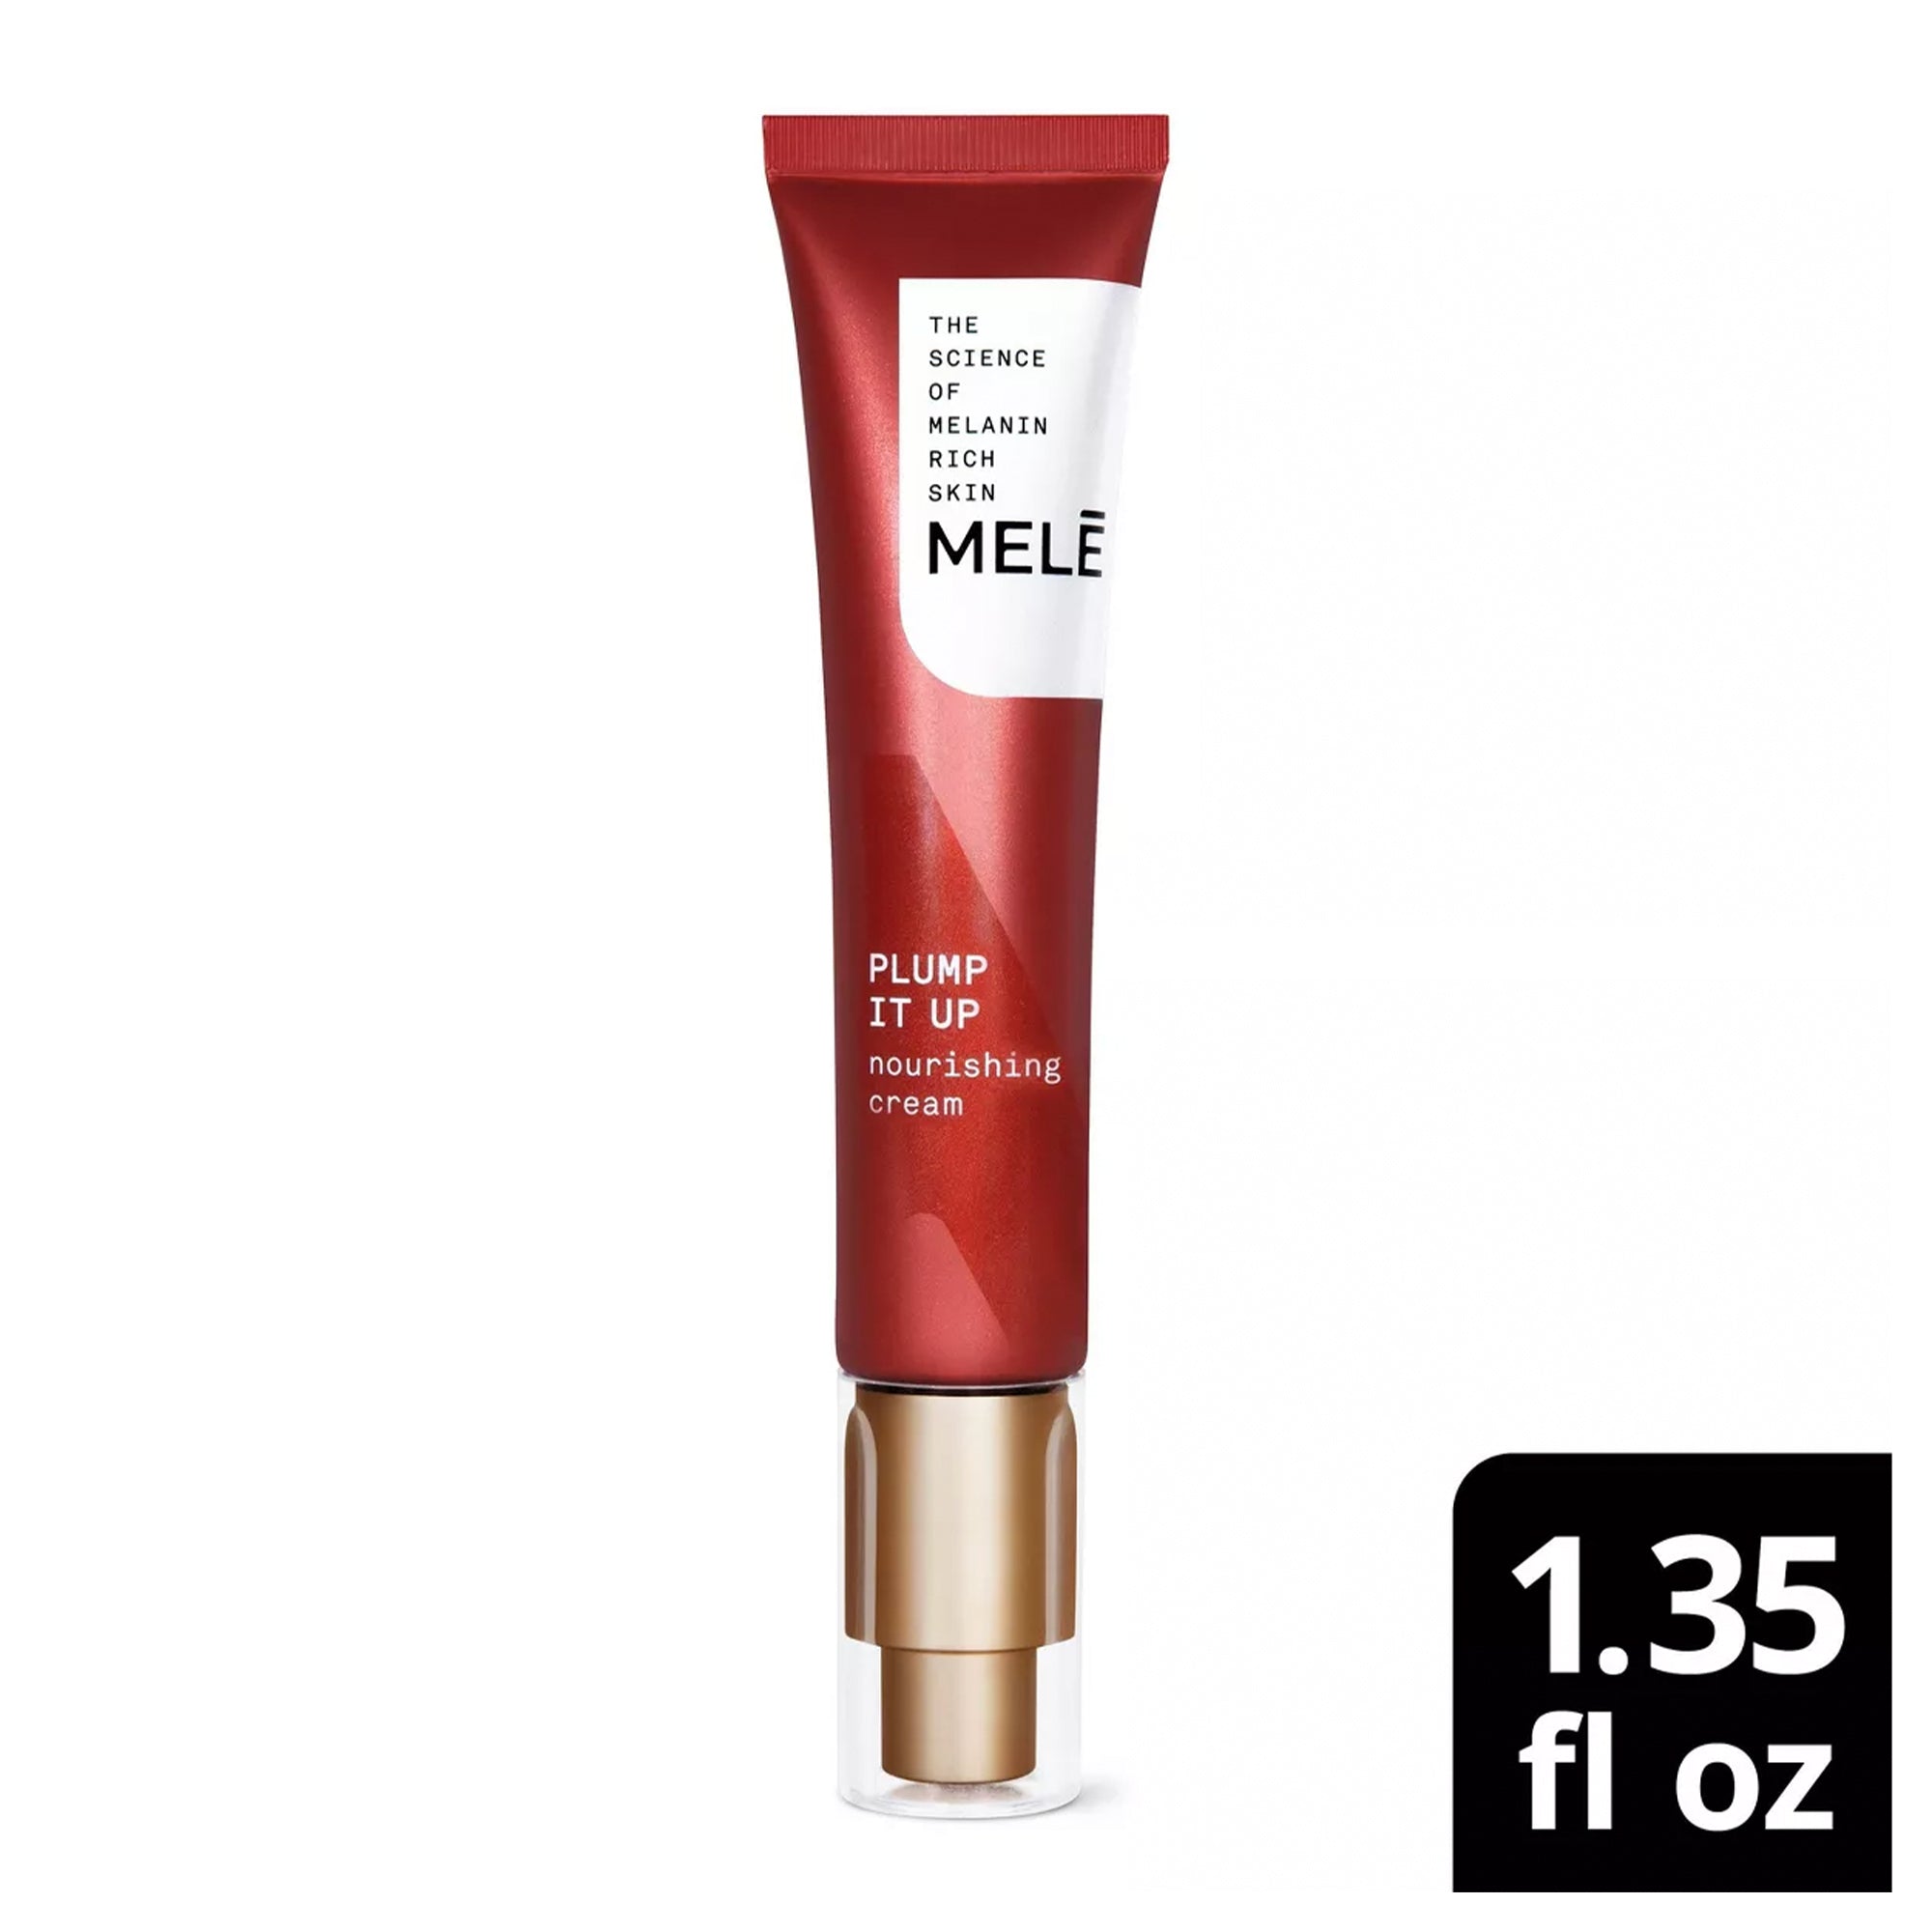 MELE Plump It Up Nourishing Facial Cream for Melanin Rich Skin, 1.35 fl oz